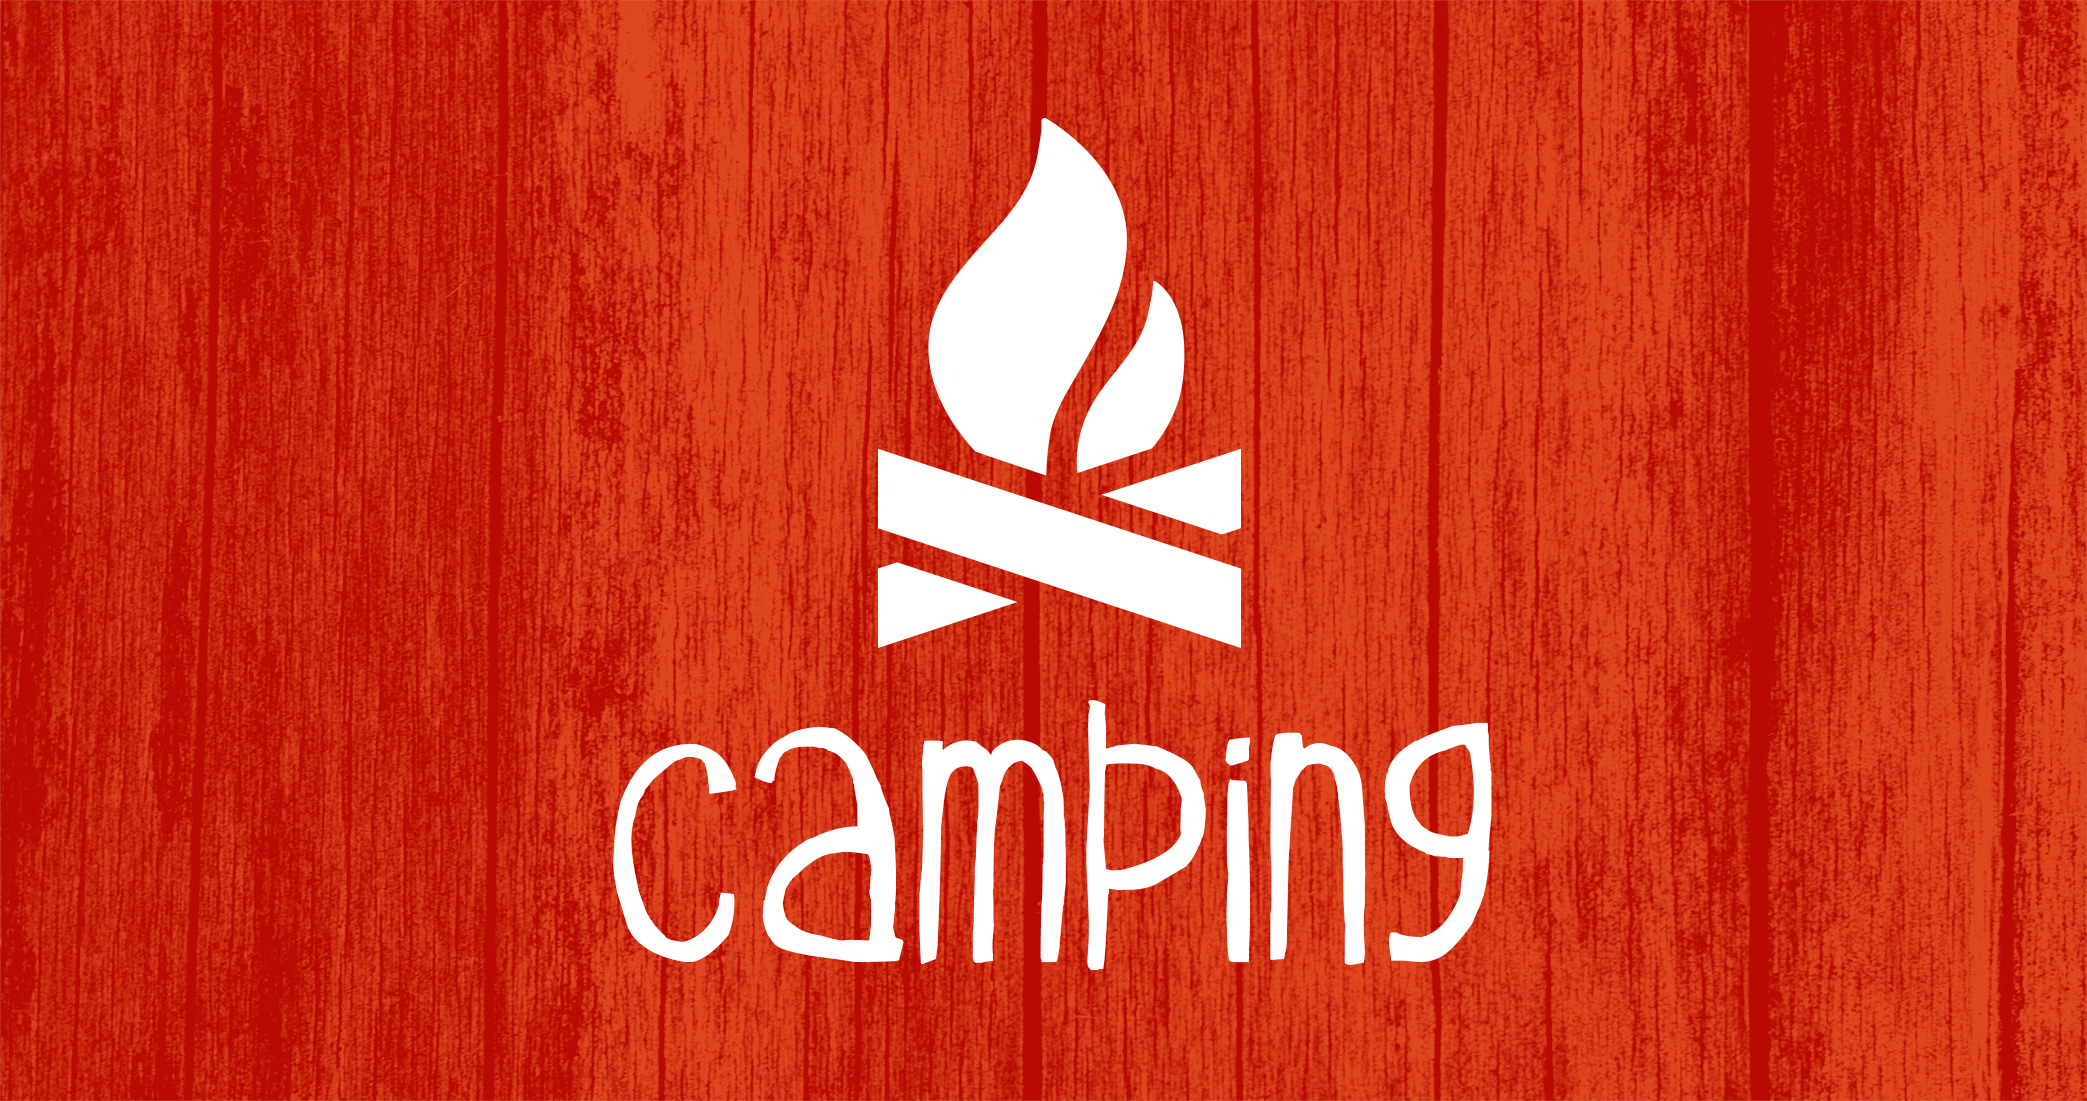 Camping texture